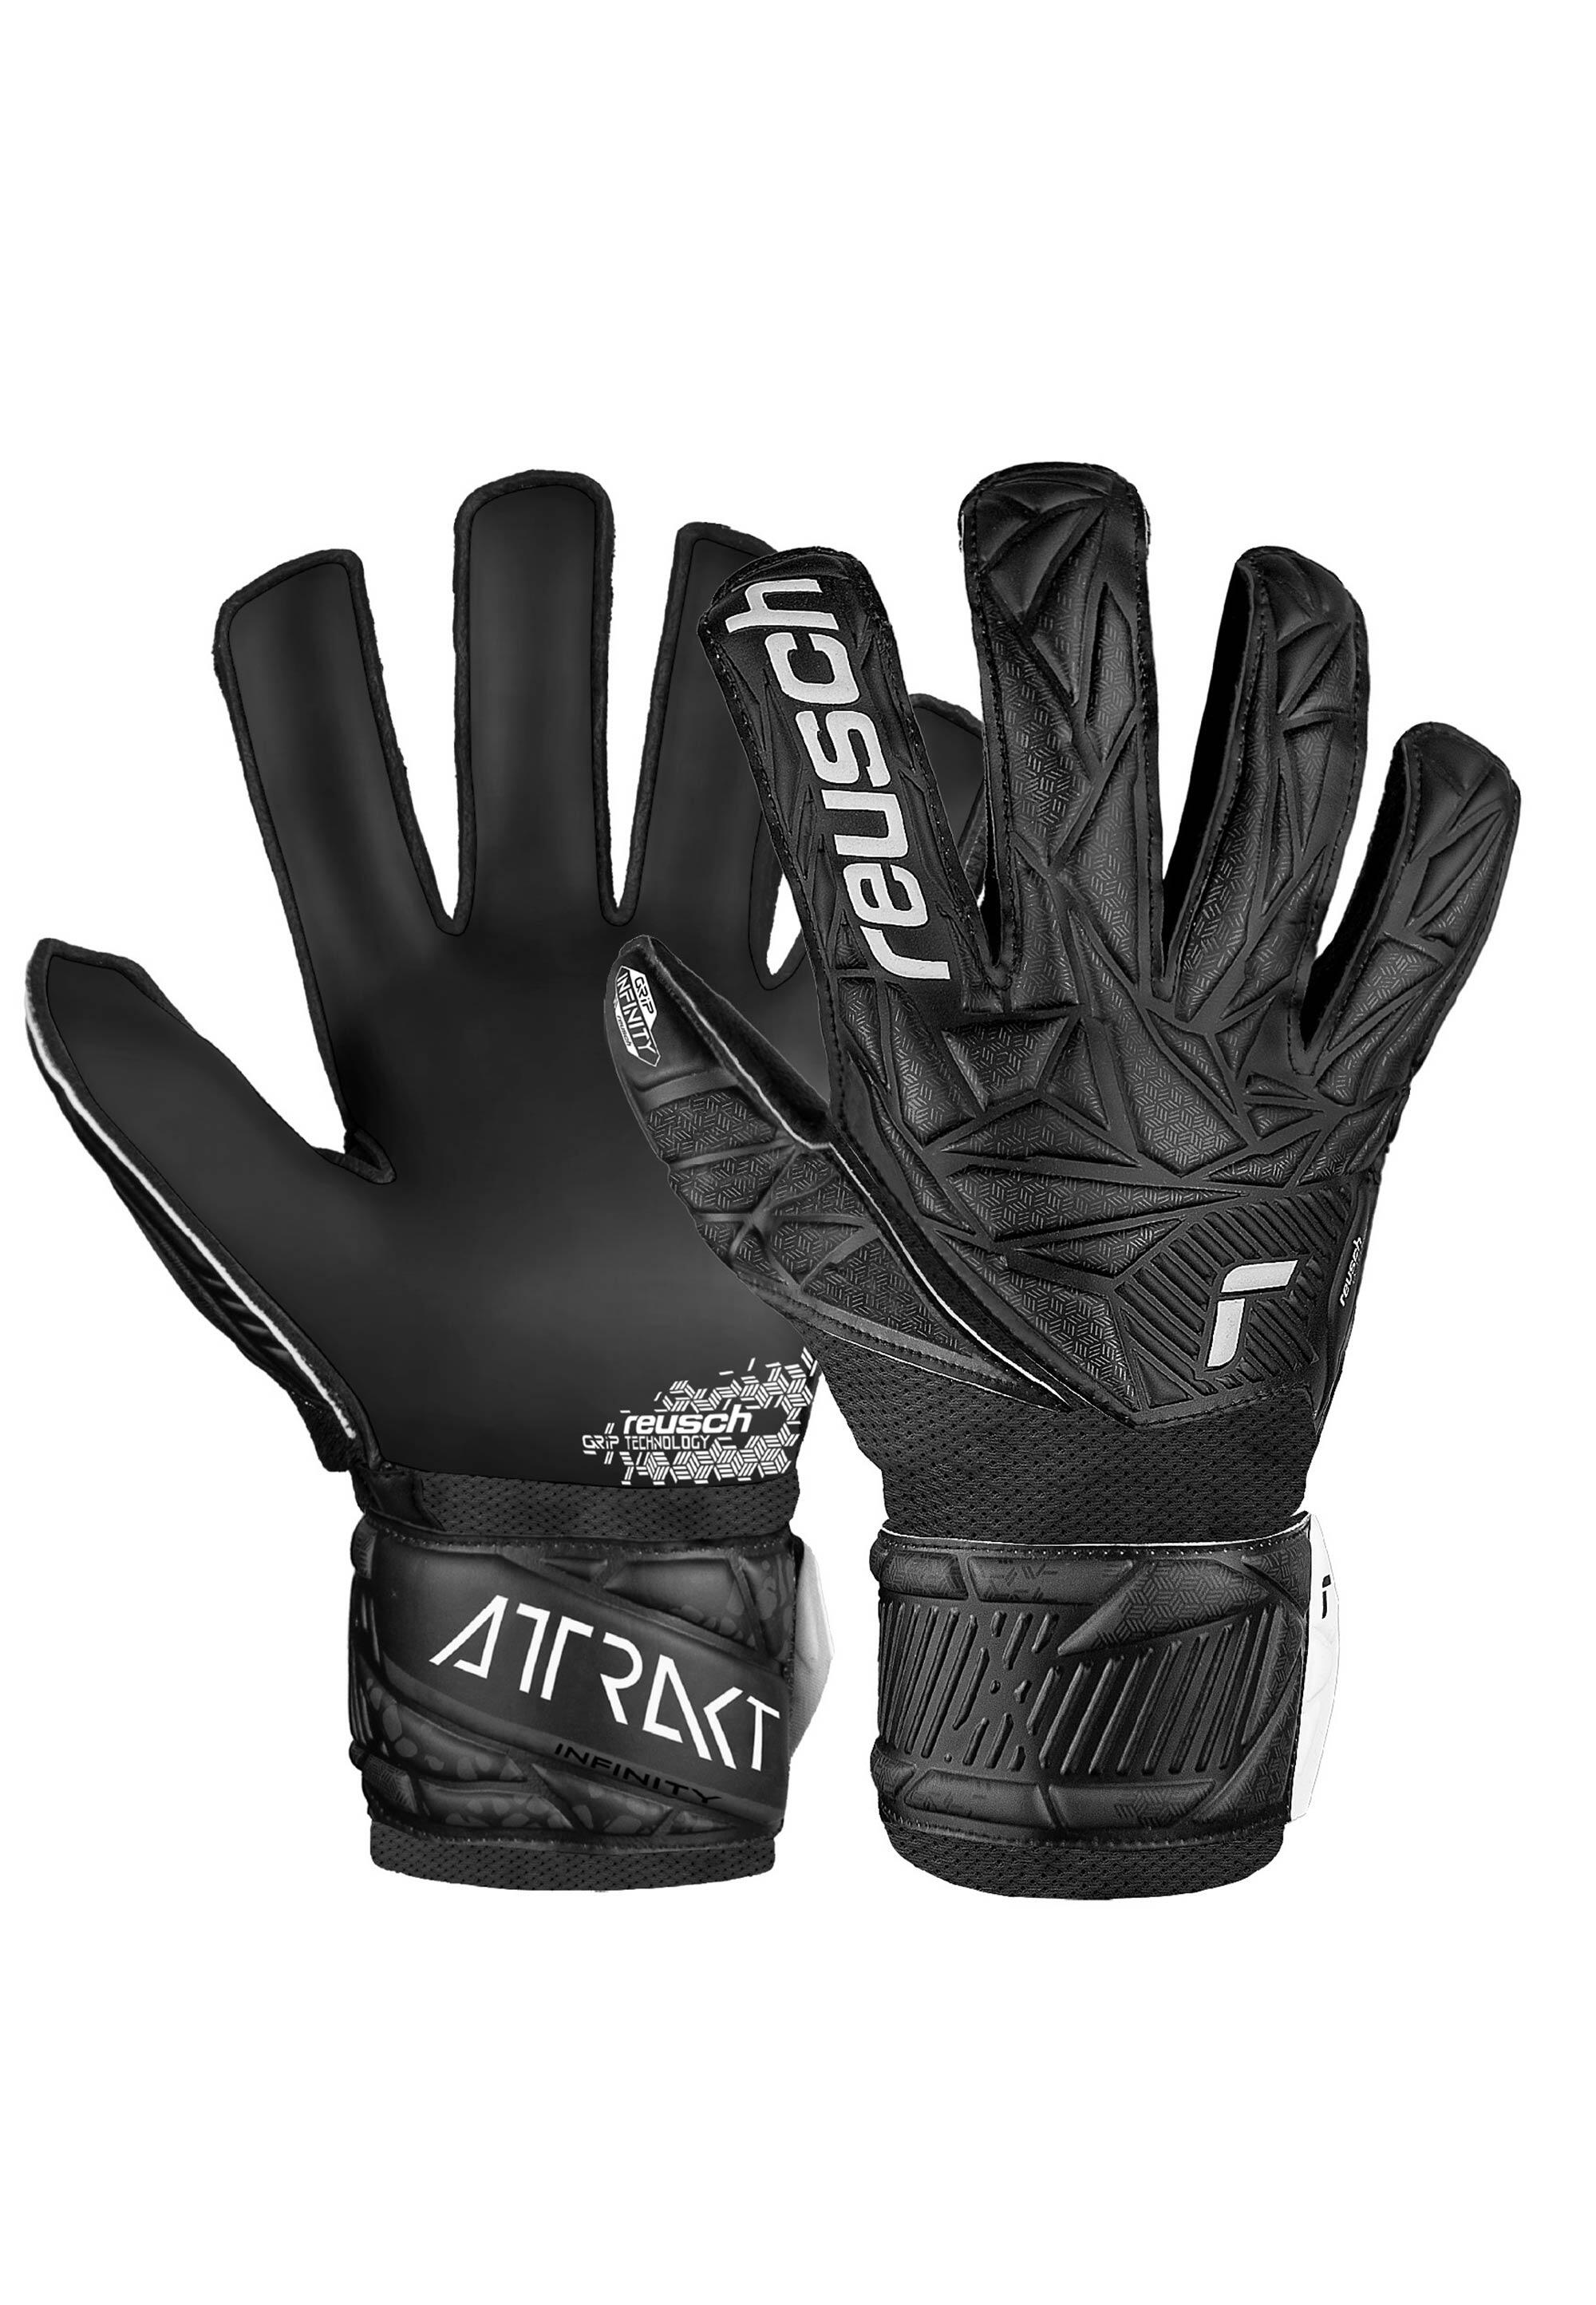 Reusch Attrakt Infinity Junior Goalkeeper Gloves 1/7